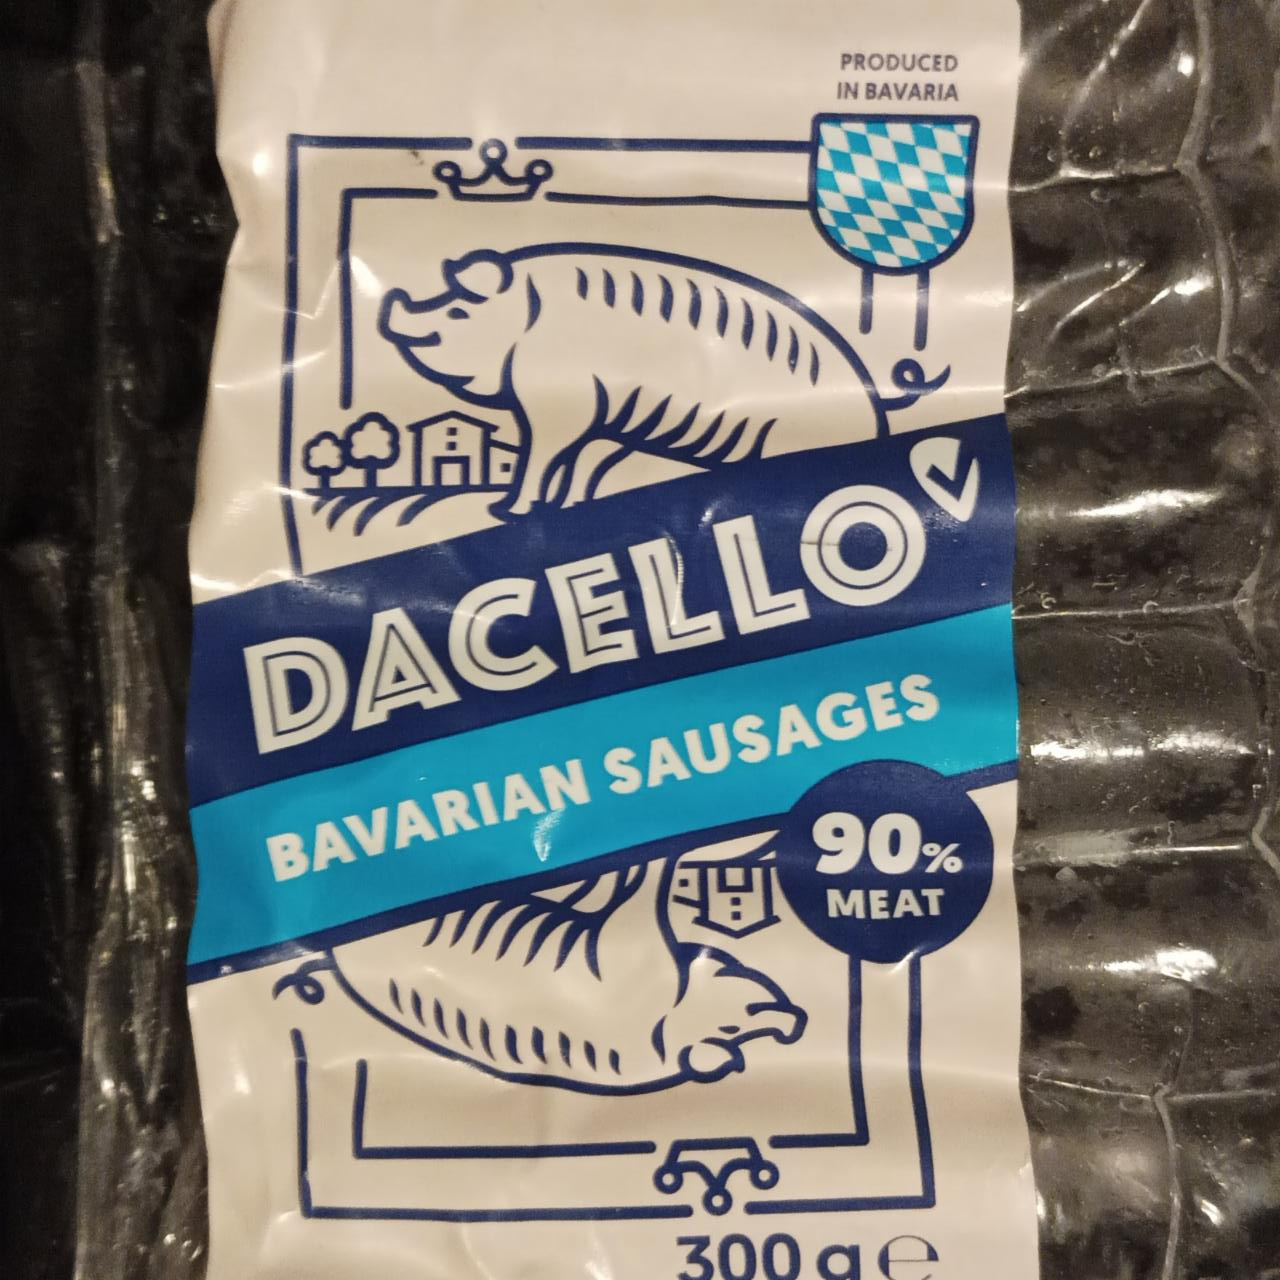 Fotografie - Bavarian sausages 90% Meat Dacello